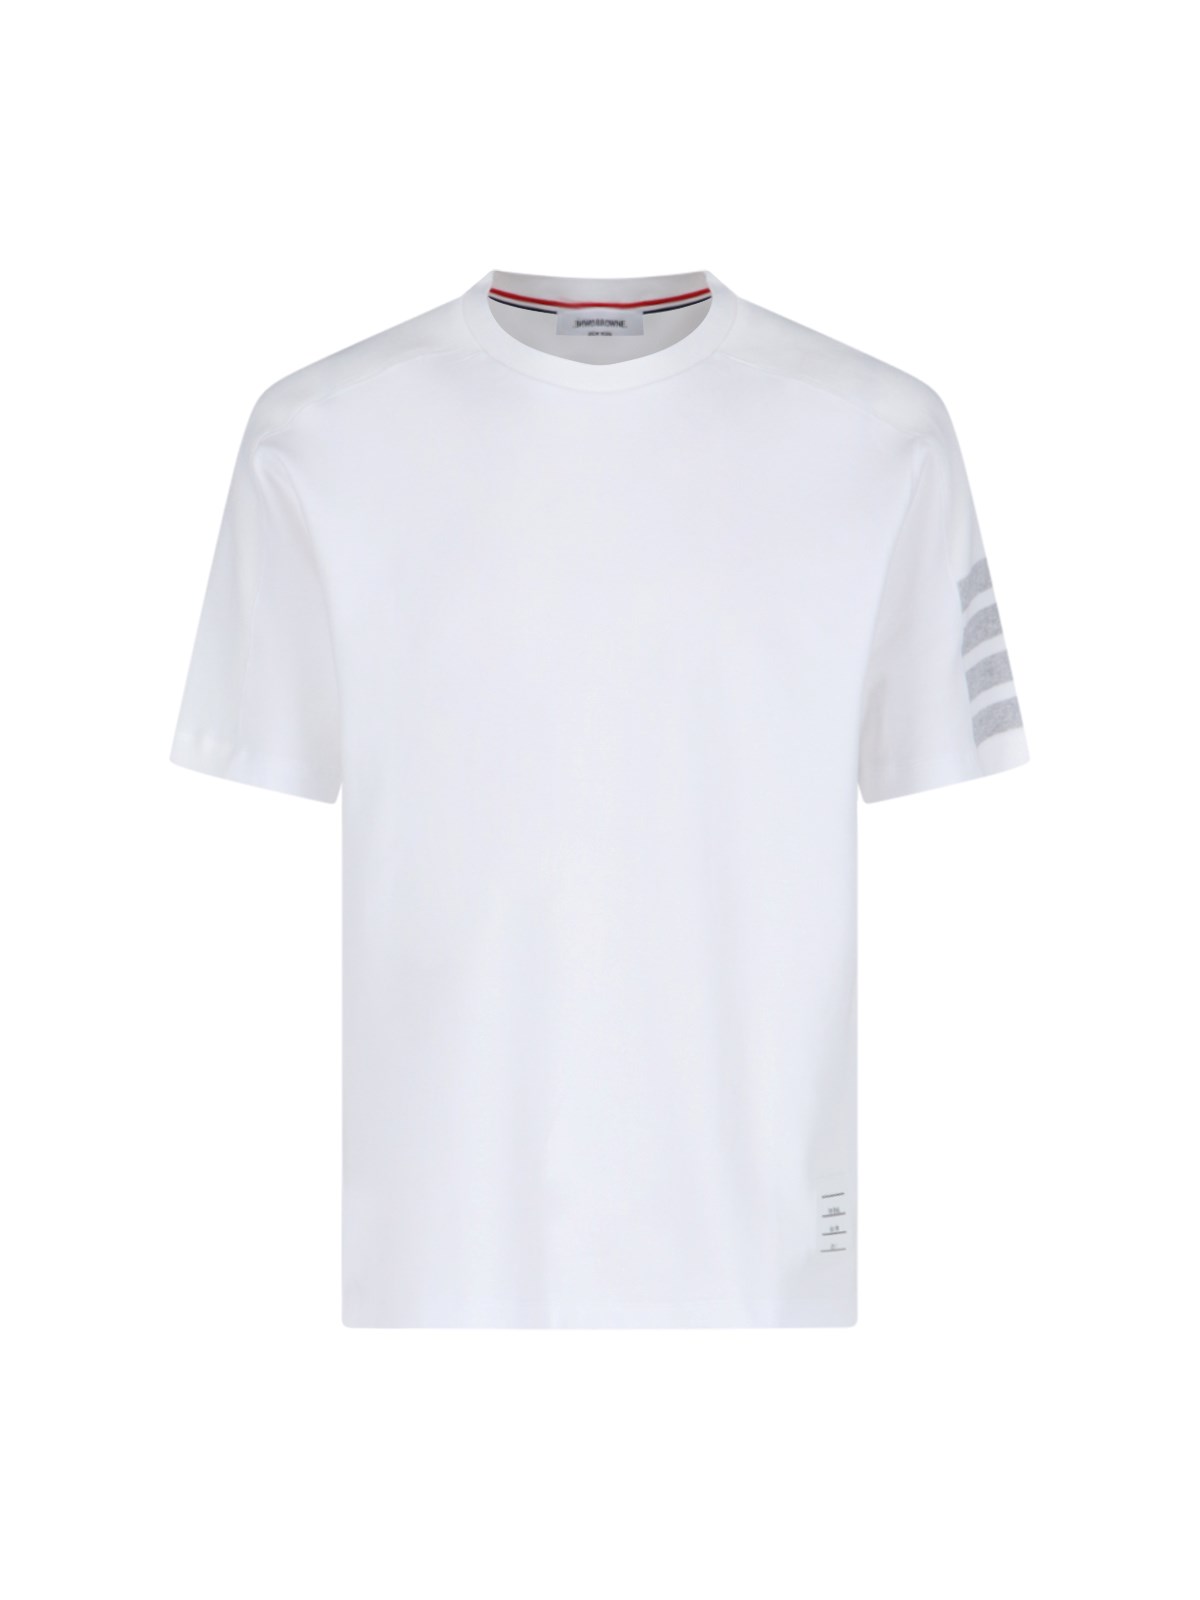 Thom Browne "4-bar" Detail T-shirt In White